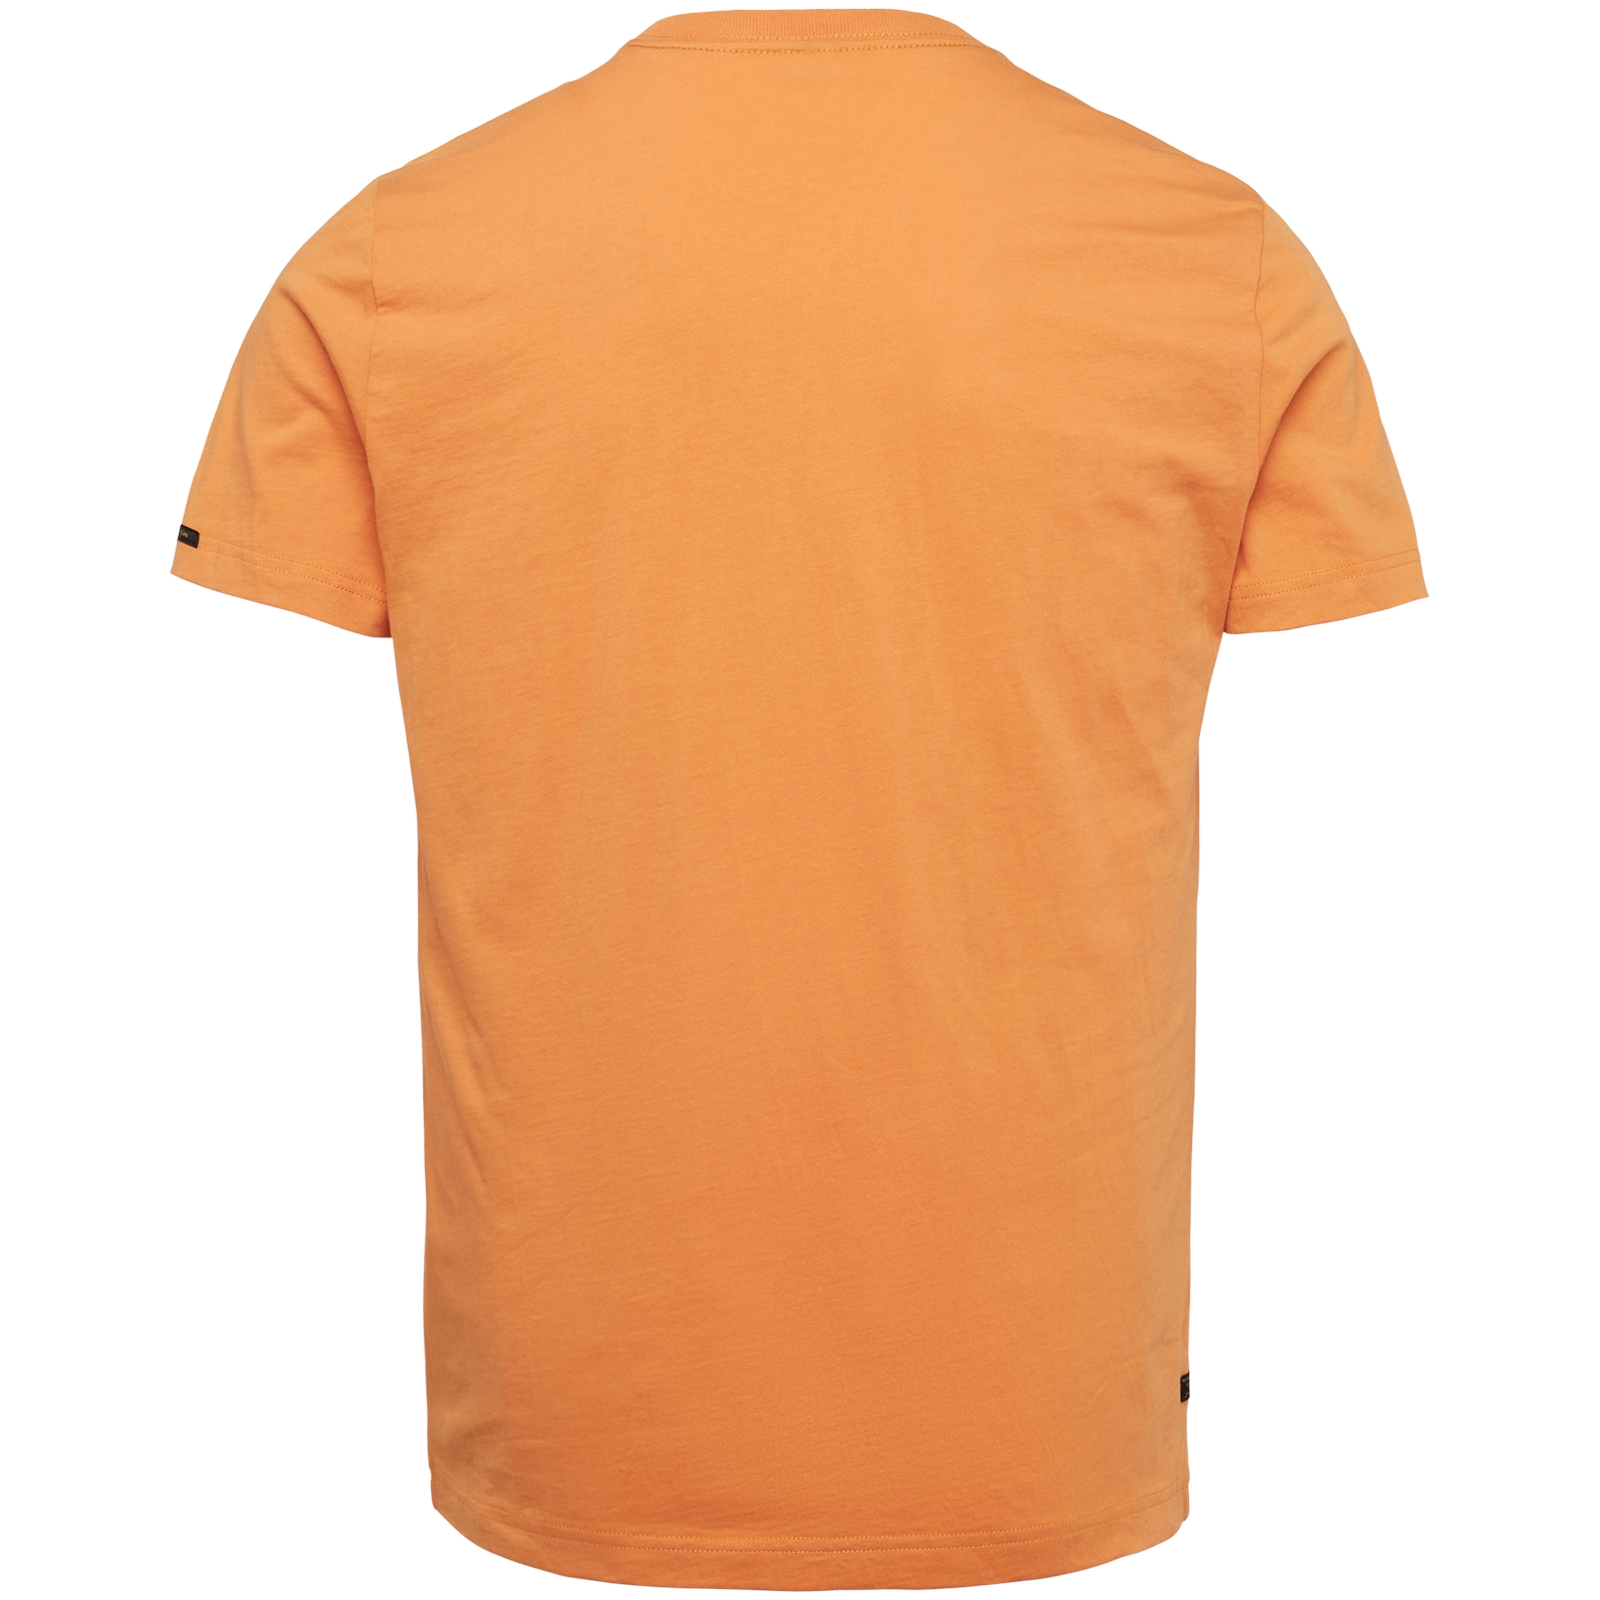 Short sleeve r-neck single jersey digital print